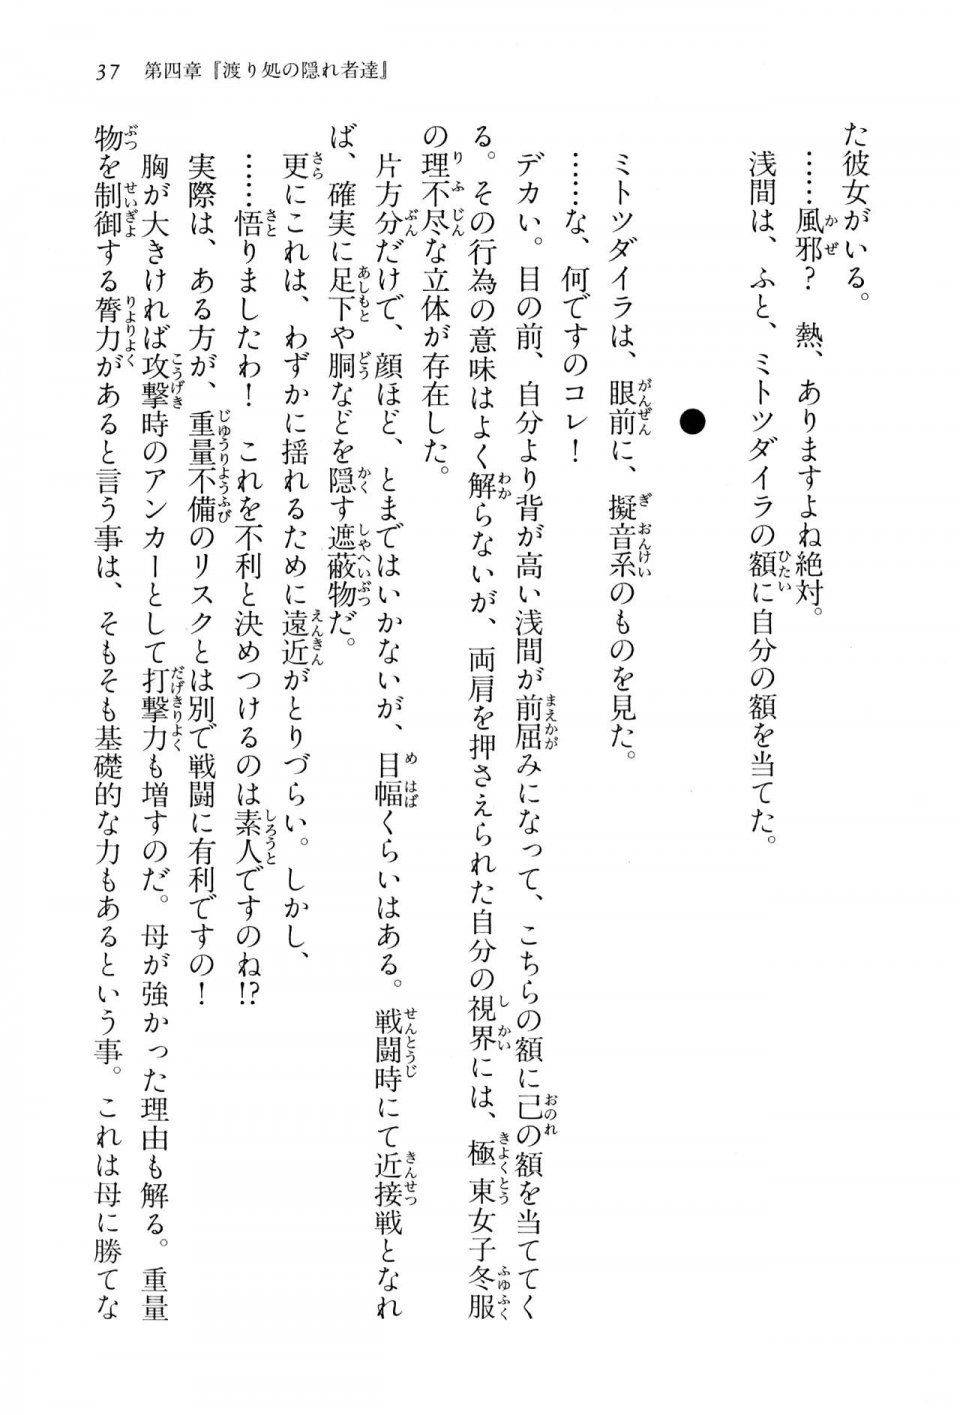 Kyoukai Senjou no Horizon BD Special Mininovel Vol 2(1B) - Photo #41